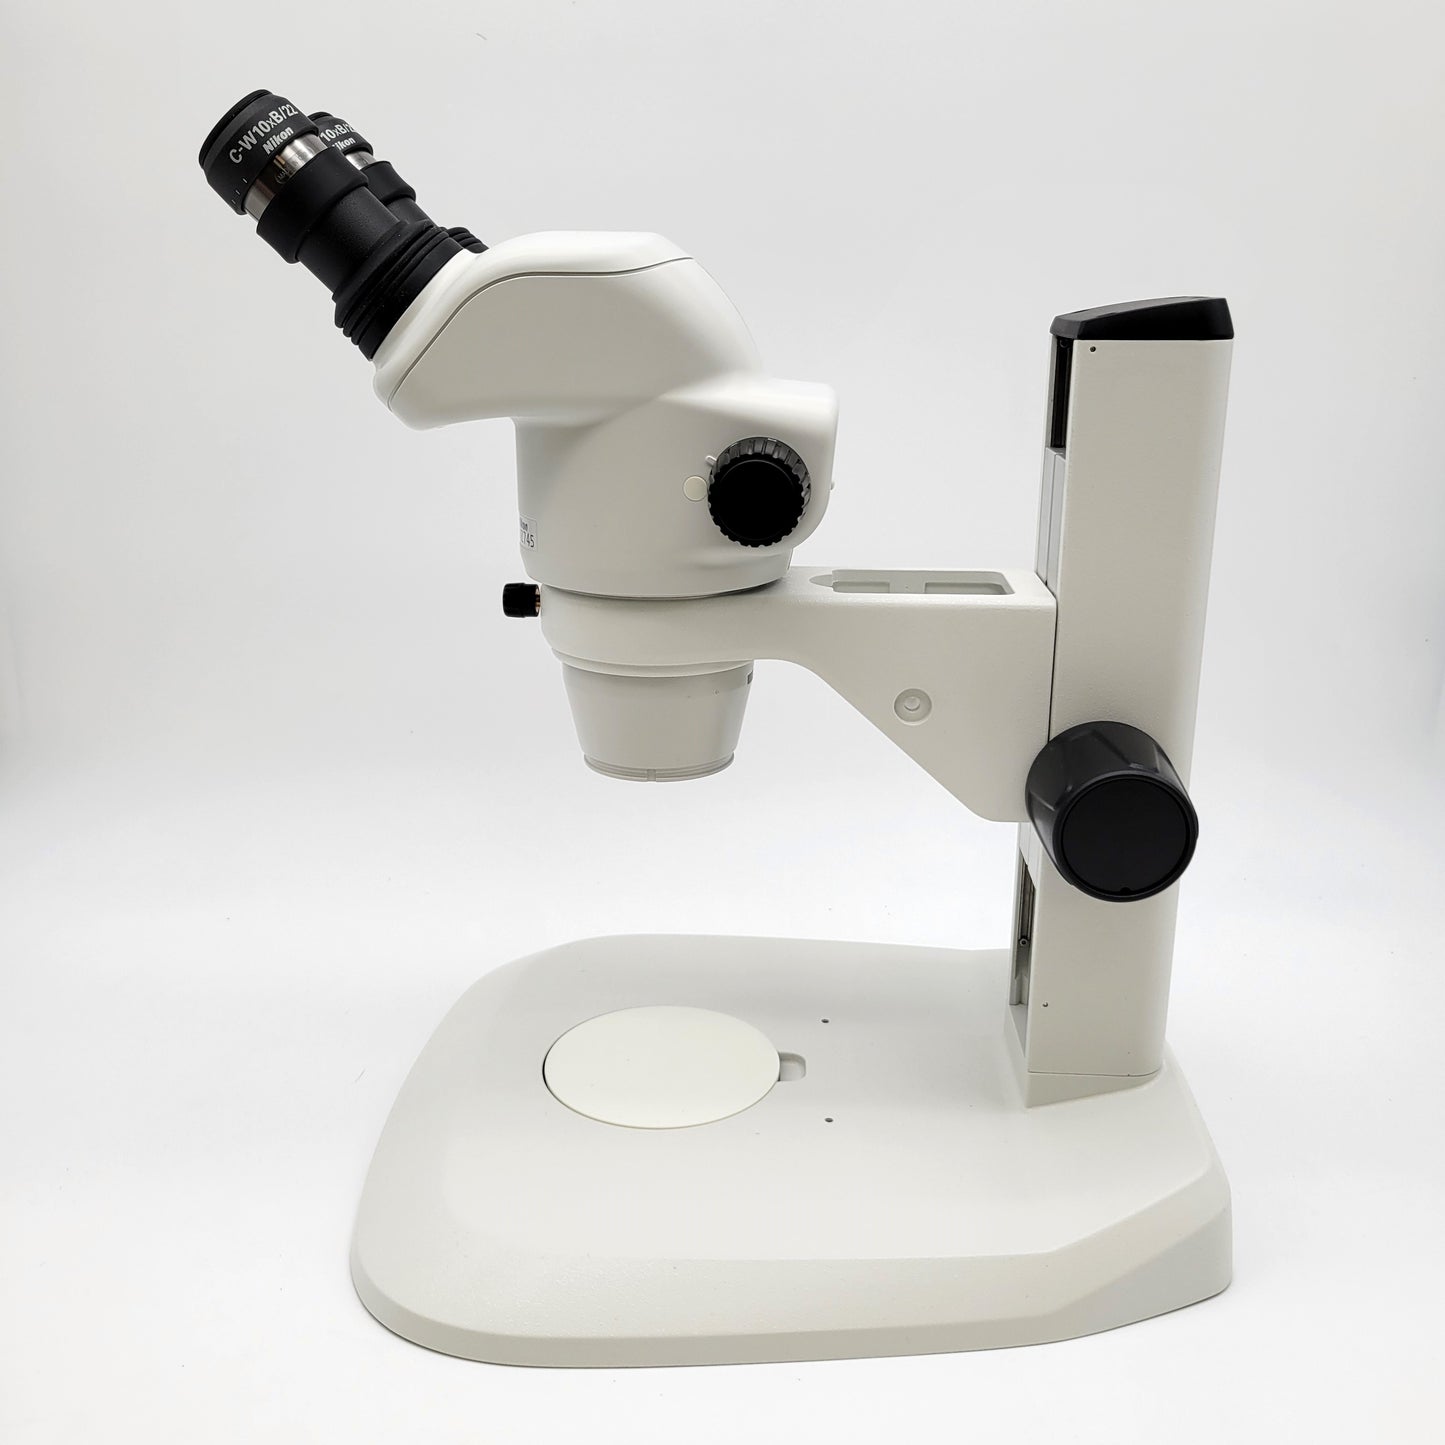 Nikon Stereo Microscope SMZ745 with Large Base Stand - microscopemarketplace